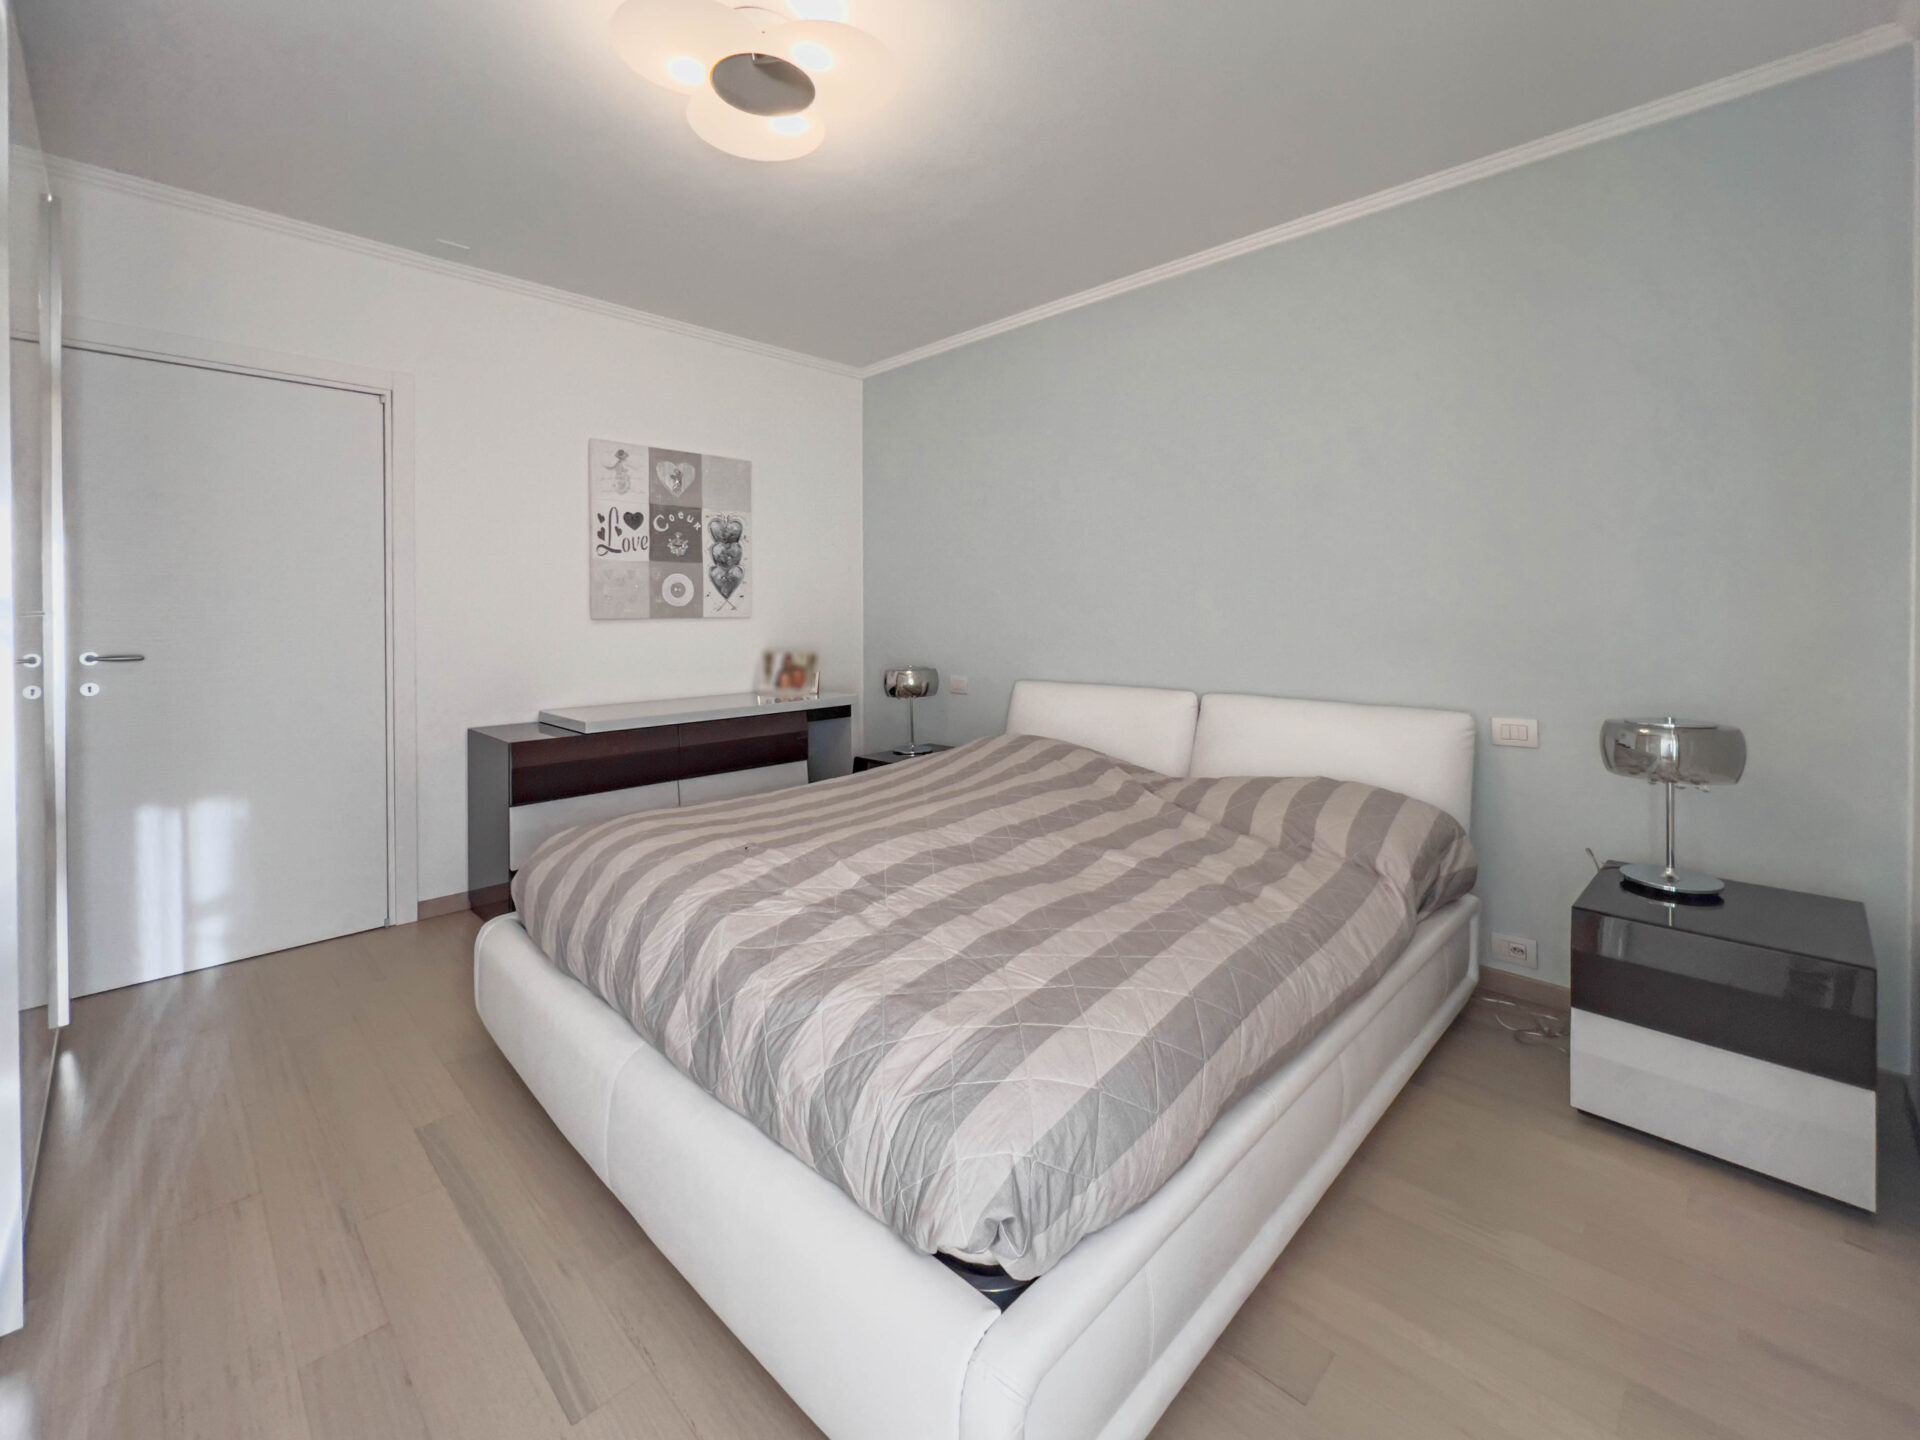 Apartment in residence with condominium pool for sale in Morbio Inferiore